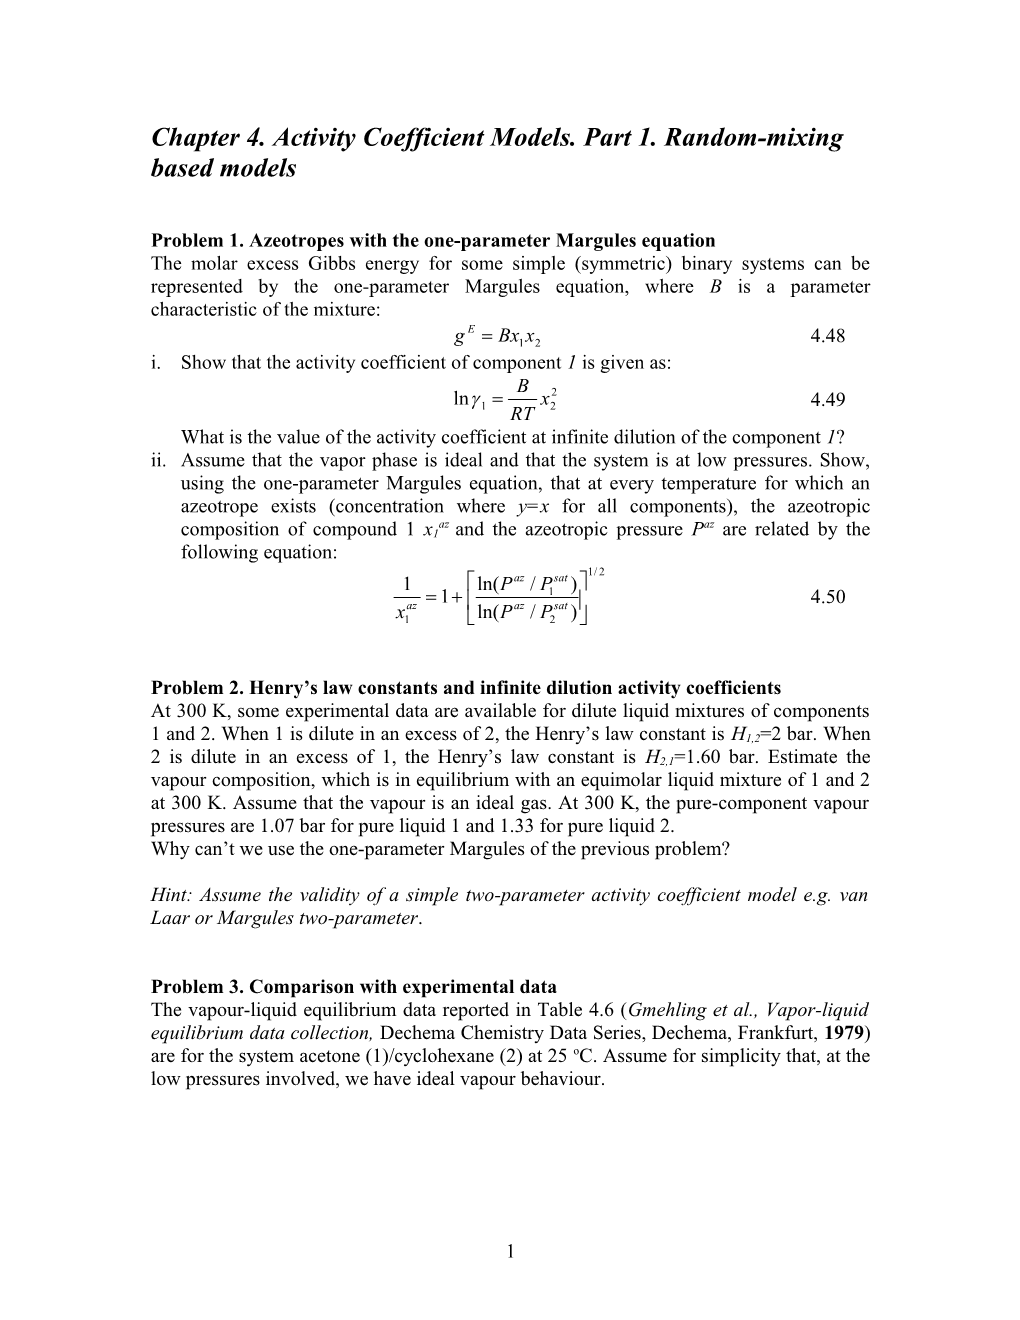 Chapter 4. Activity Coefficient Models. Part 1. Random-Mixing Based Models